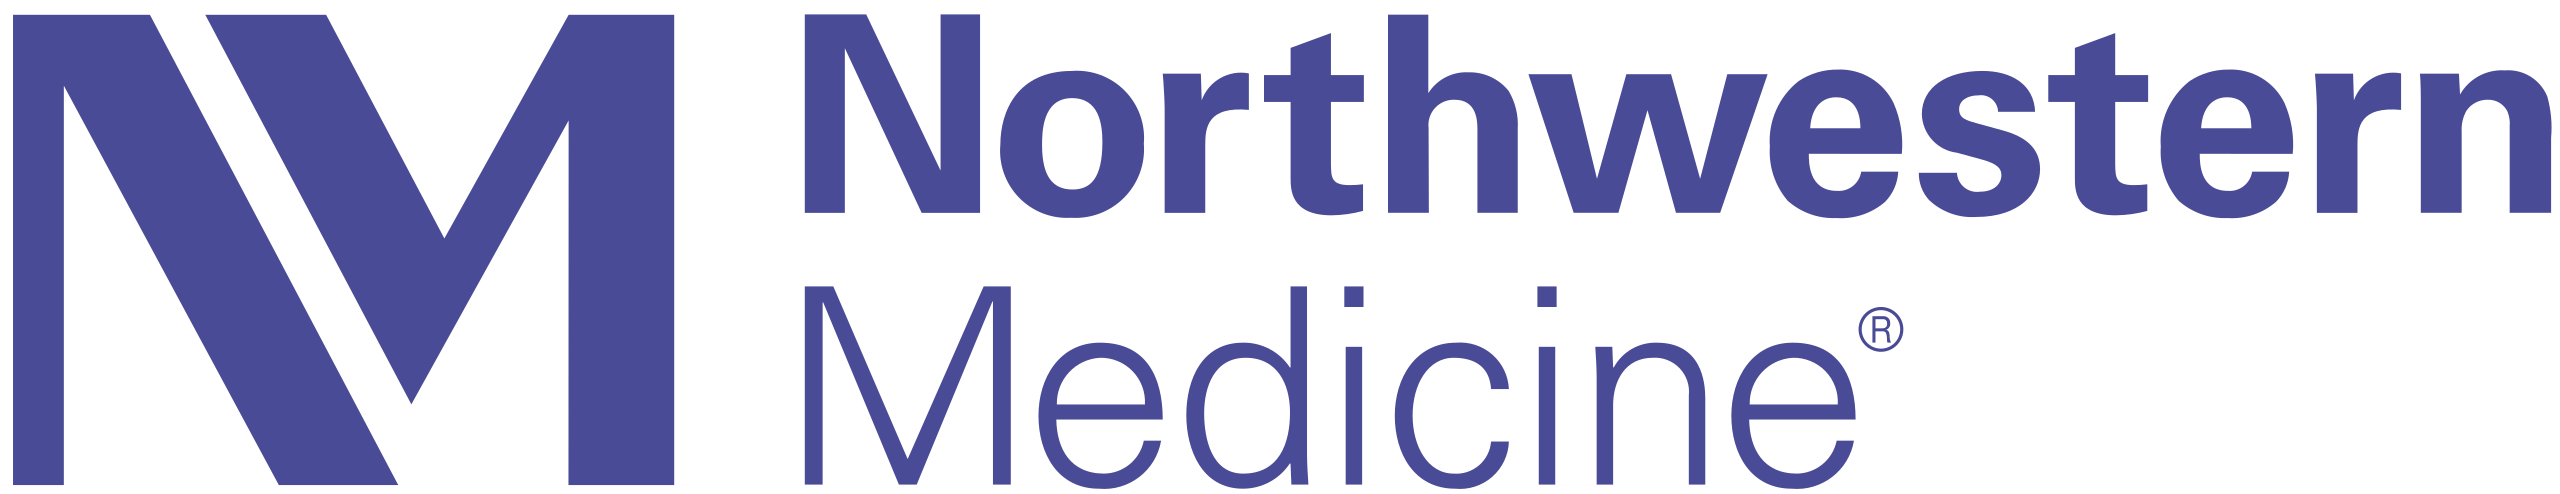 2560px-Northwestern_Medicine_logo